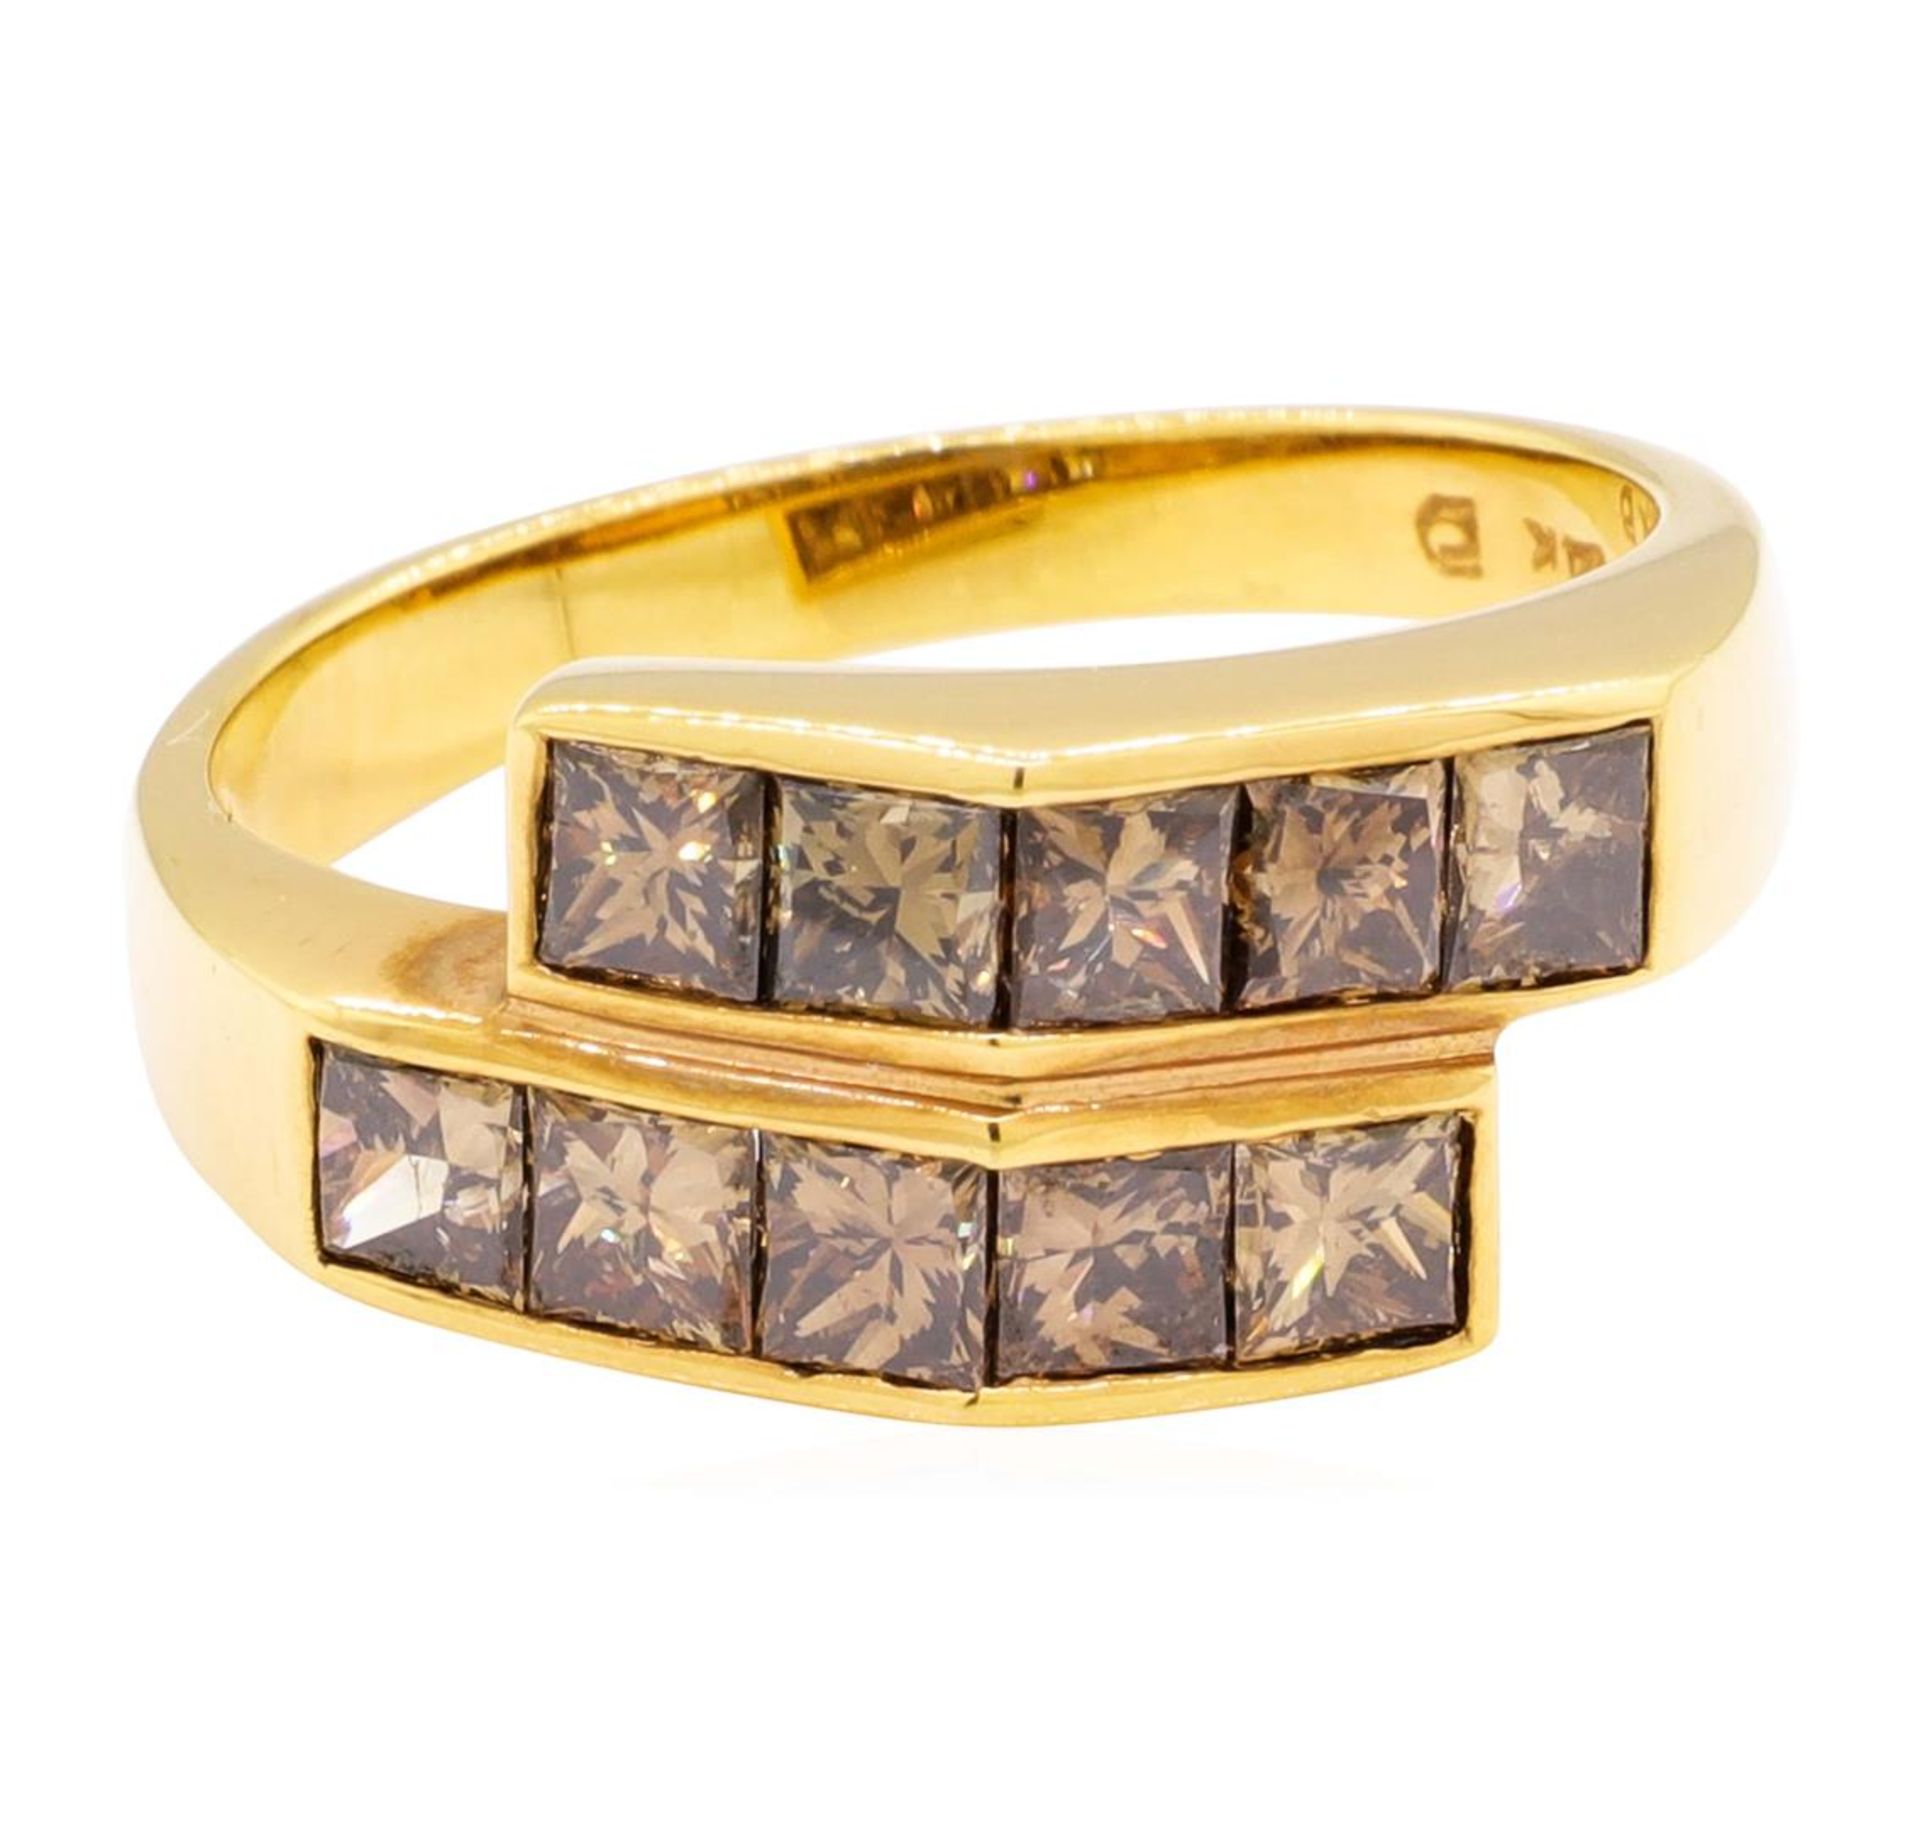 1.65 ctw Princess Cut Diamond Ring - 14KT Rose Gold - Image 2 of 5